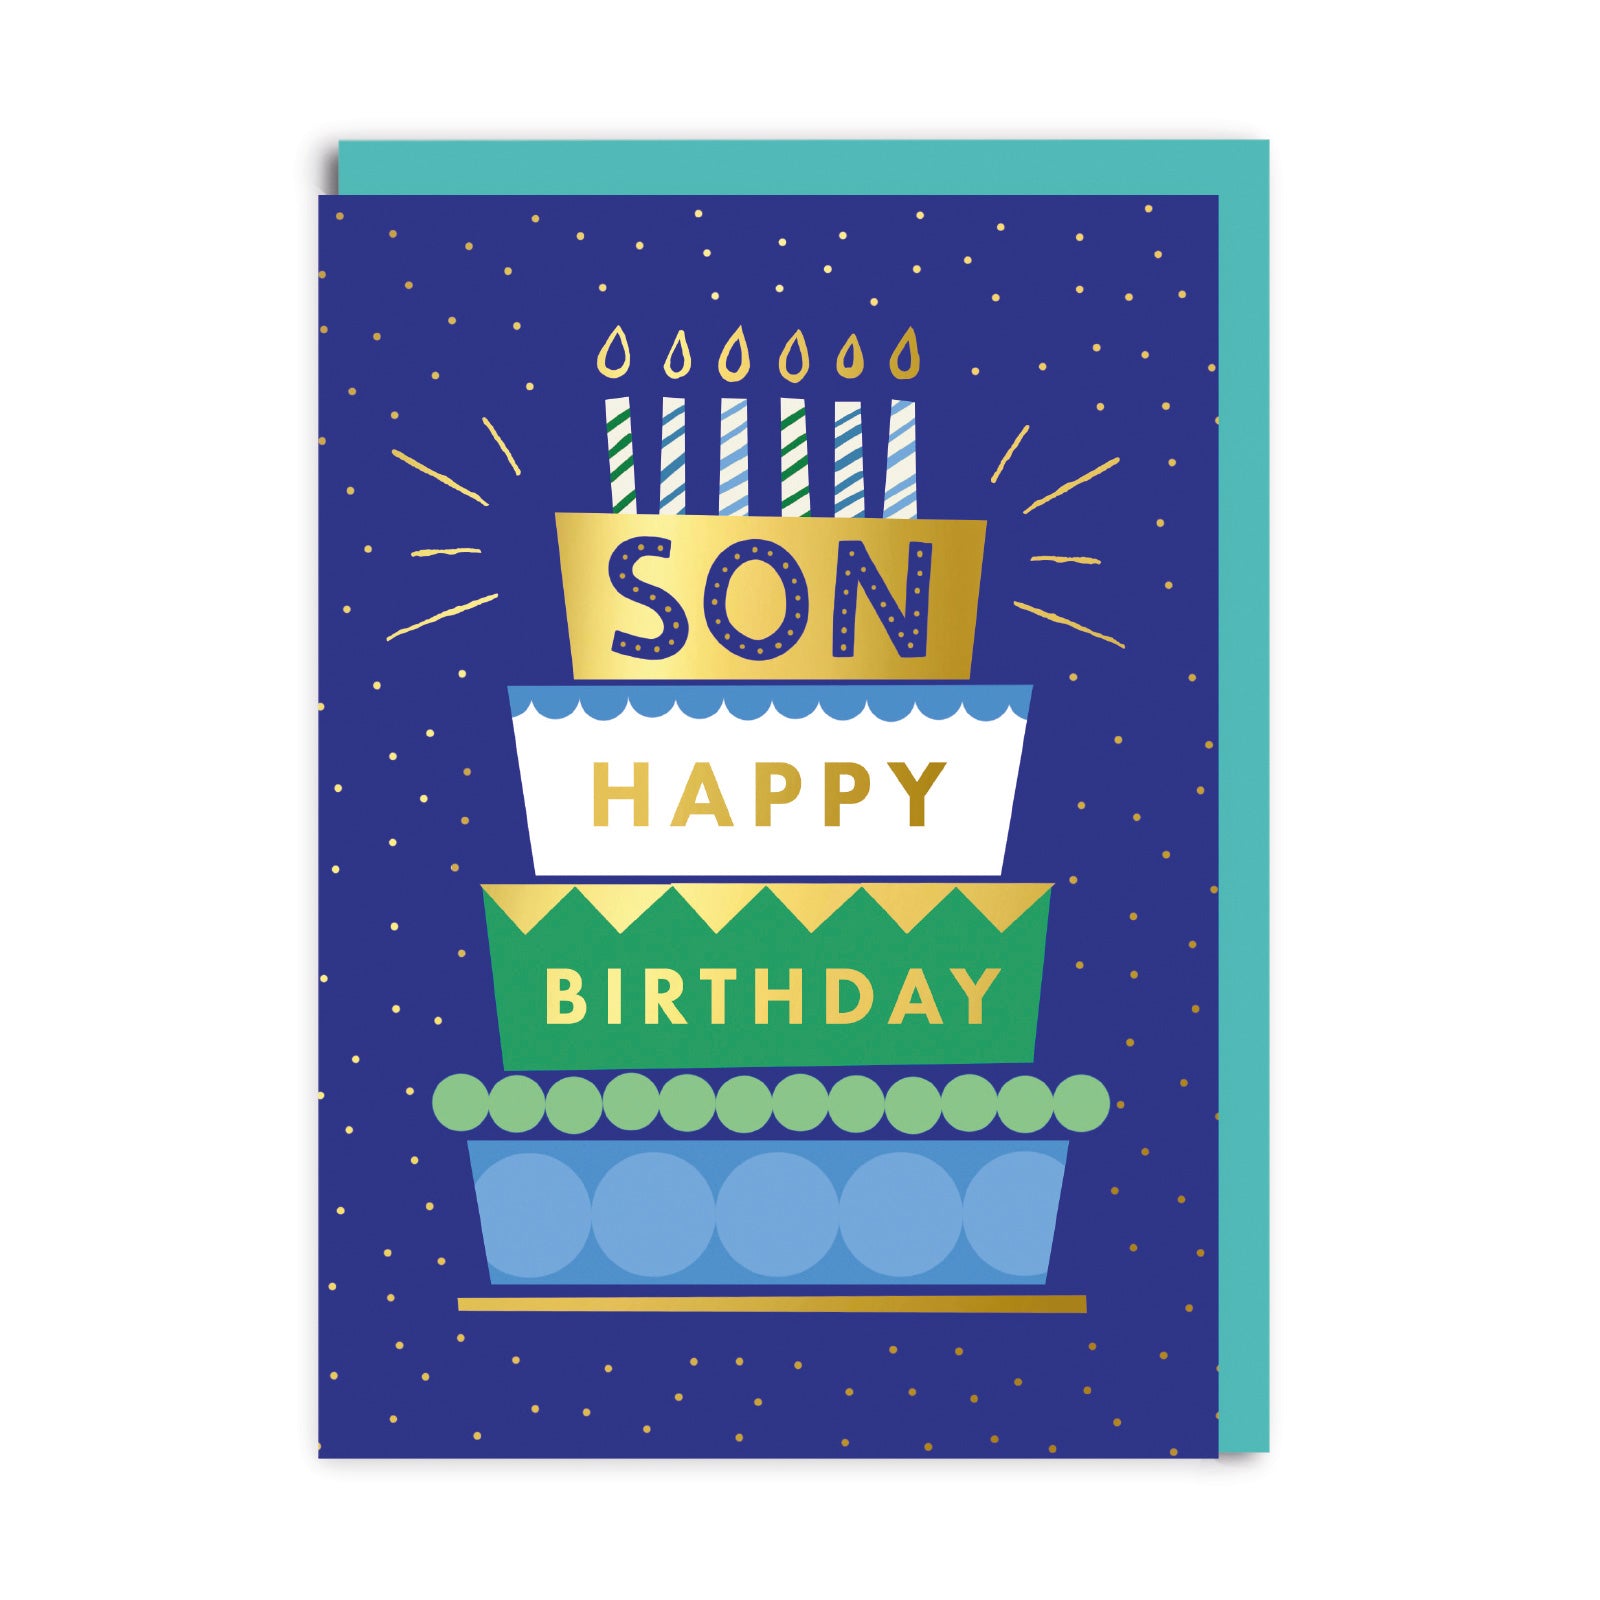 Son Cake Birthday Greeting Card